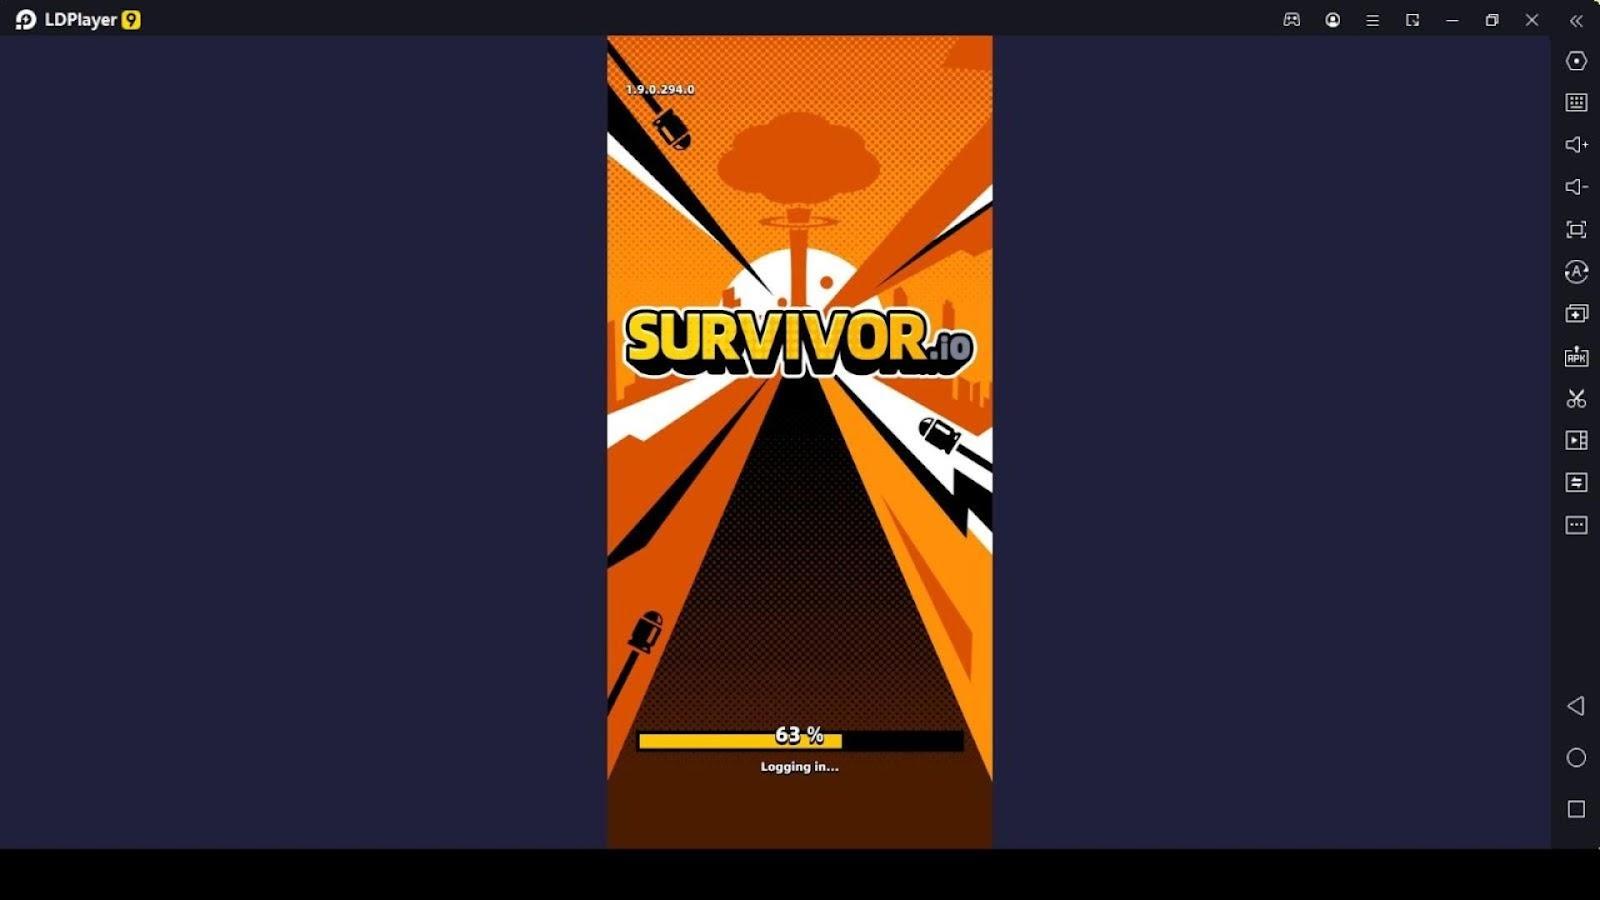 Survivor io Best Skills: Weapons to Survive the Zombie Apocalypse